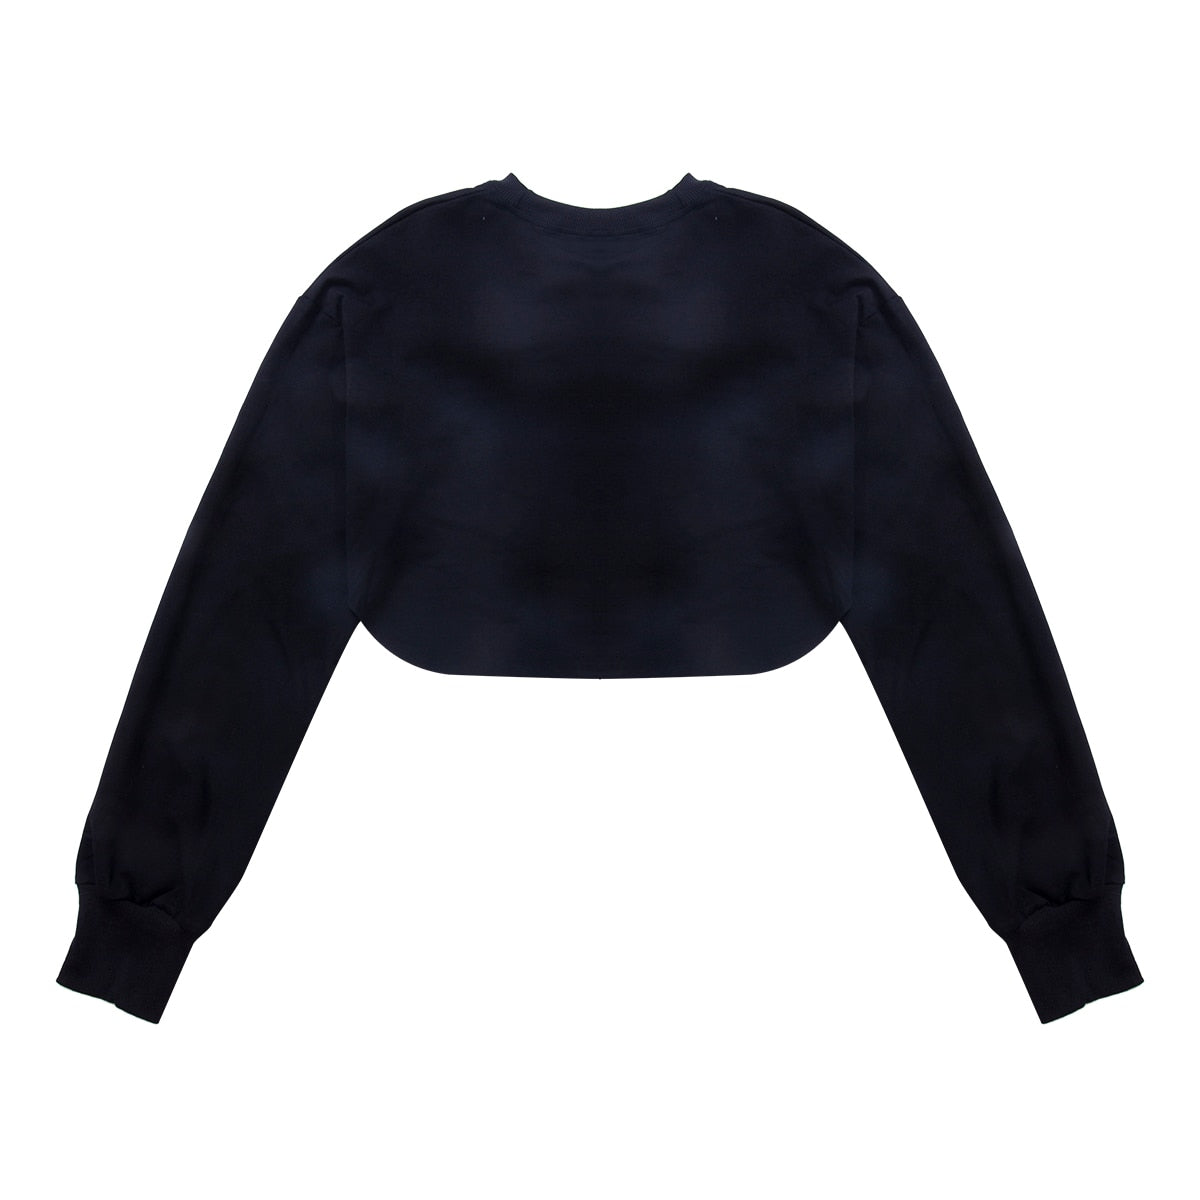 Extreme Crop Sweater Shrug